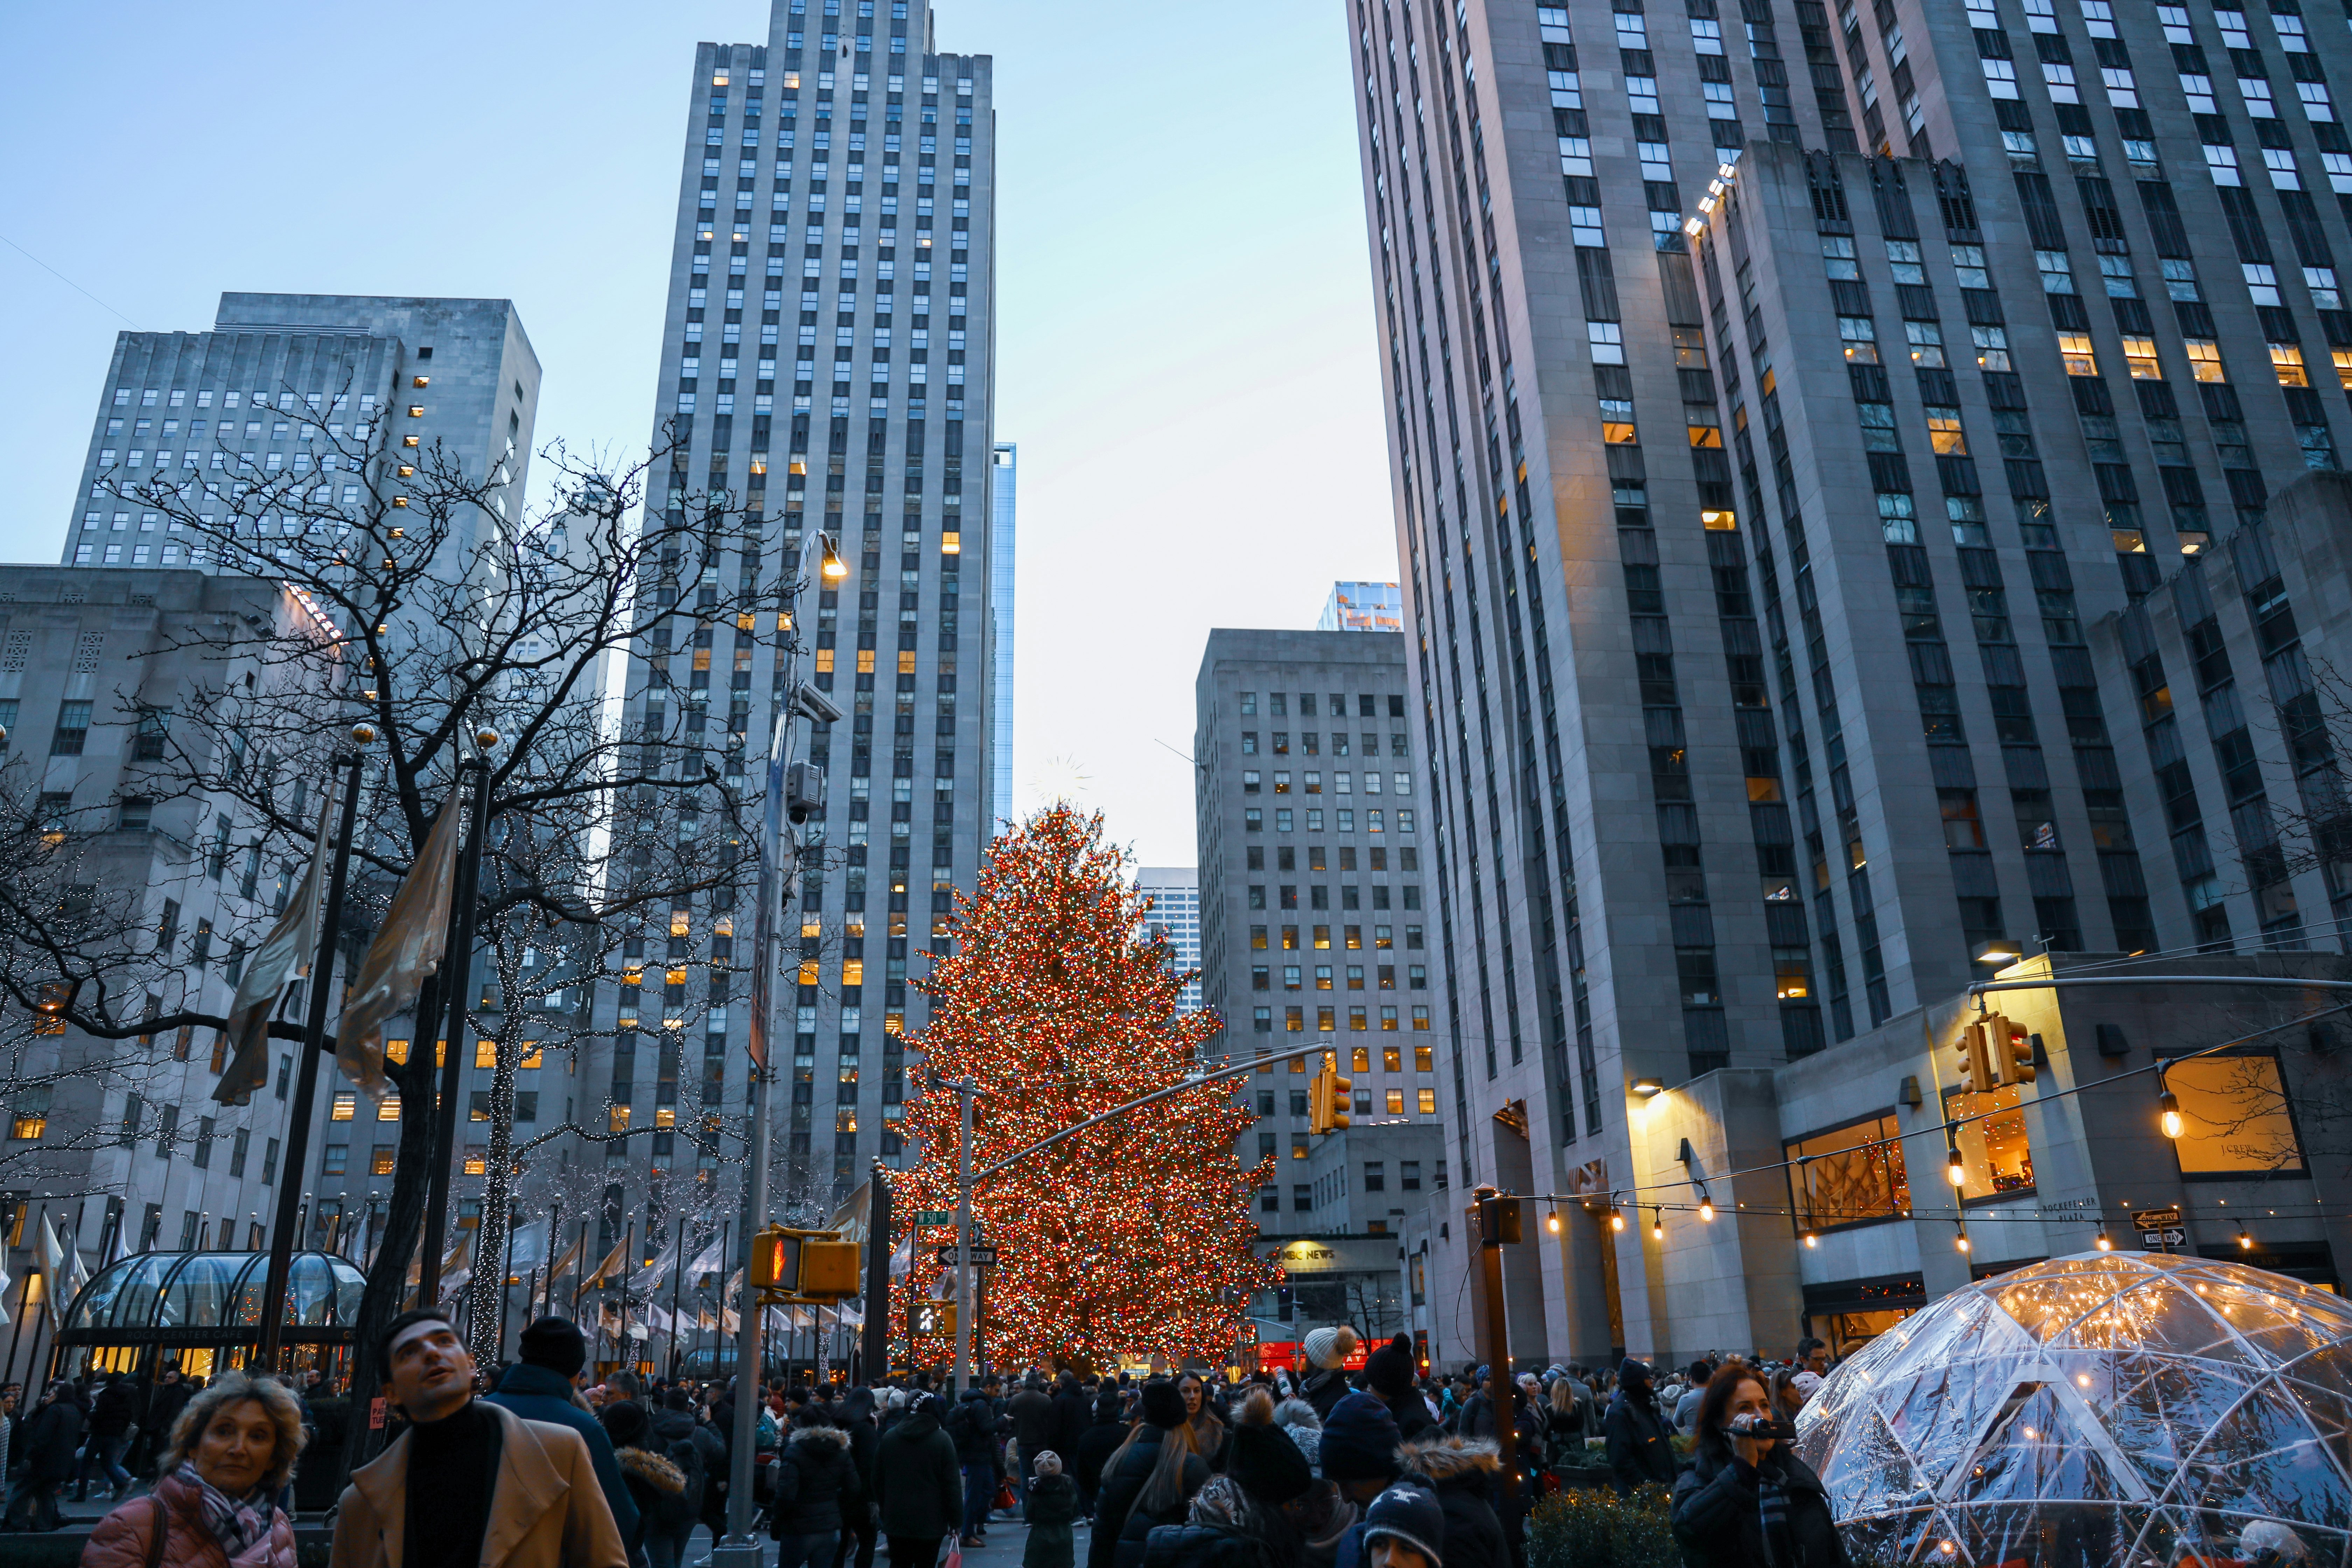 Rockefeller square 
@NY Dec 2019 